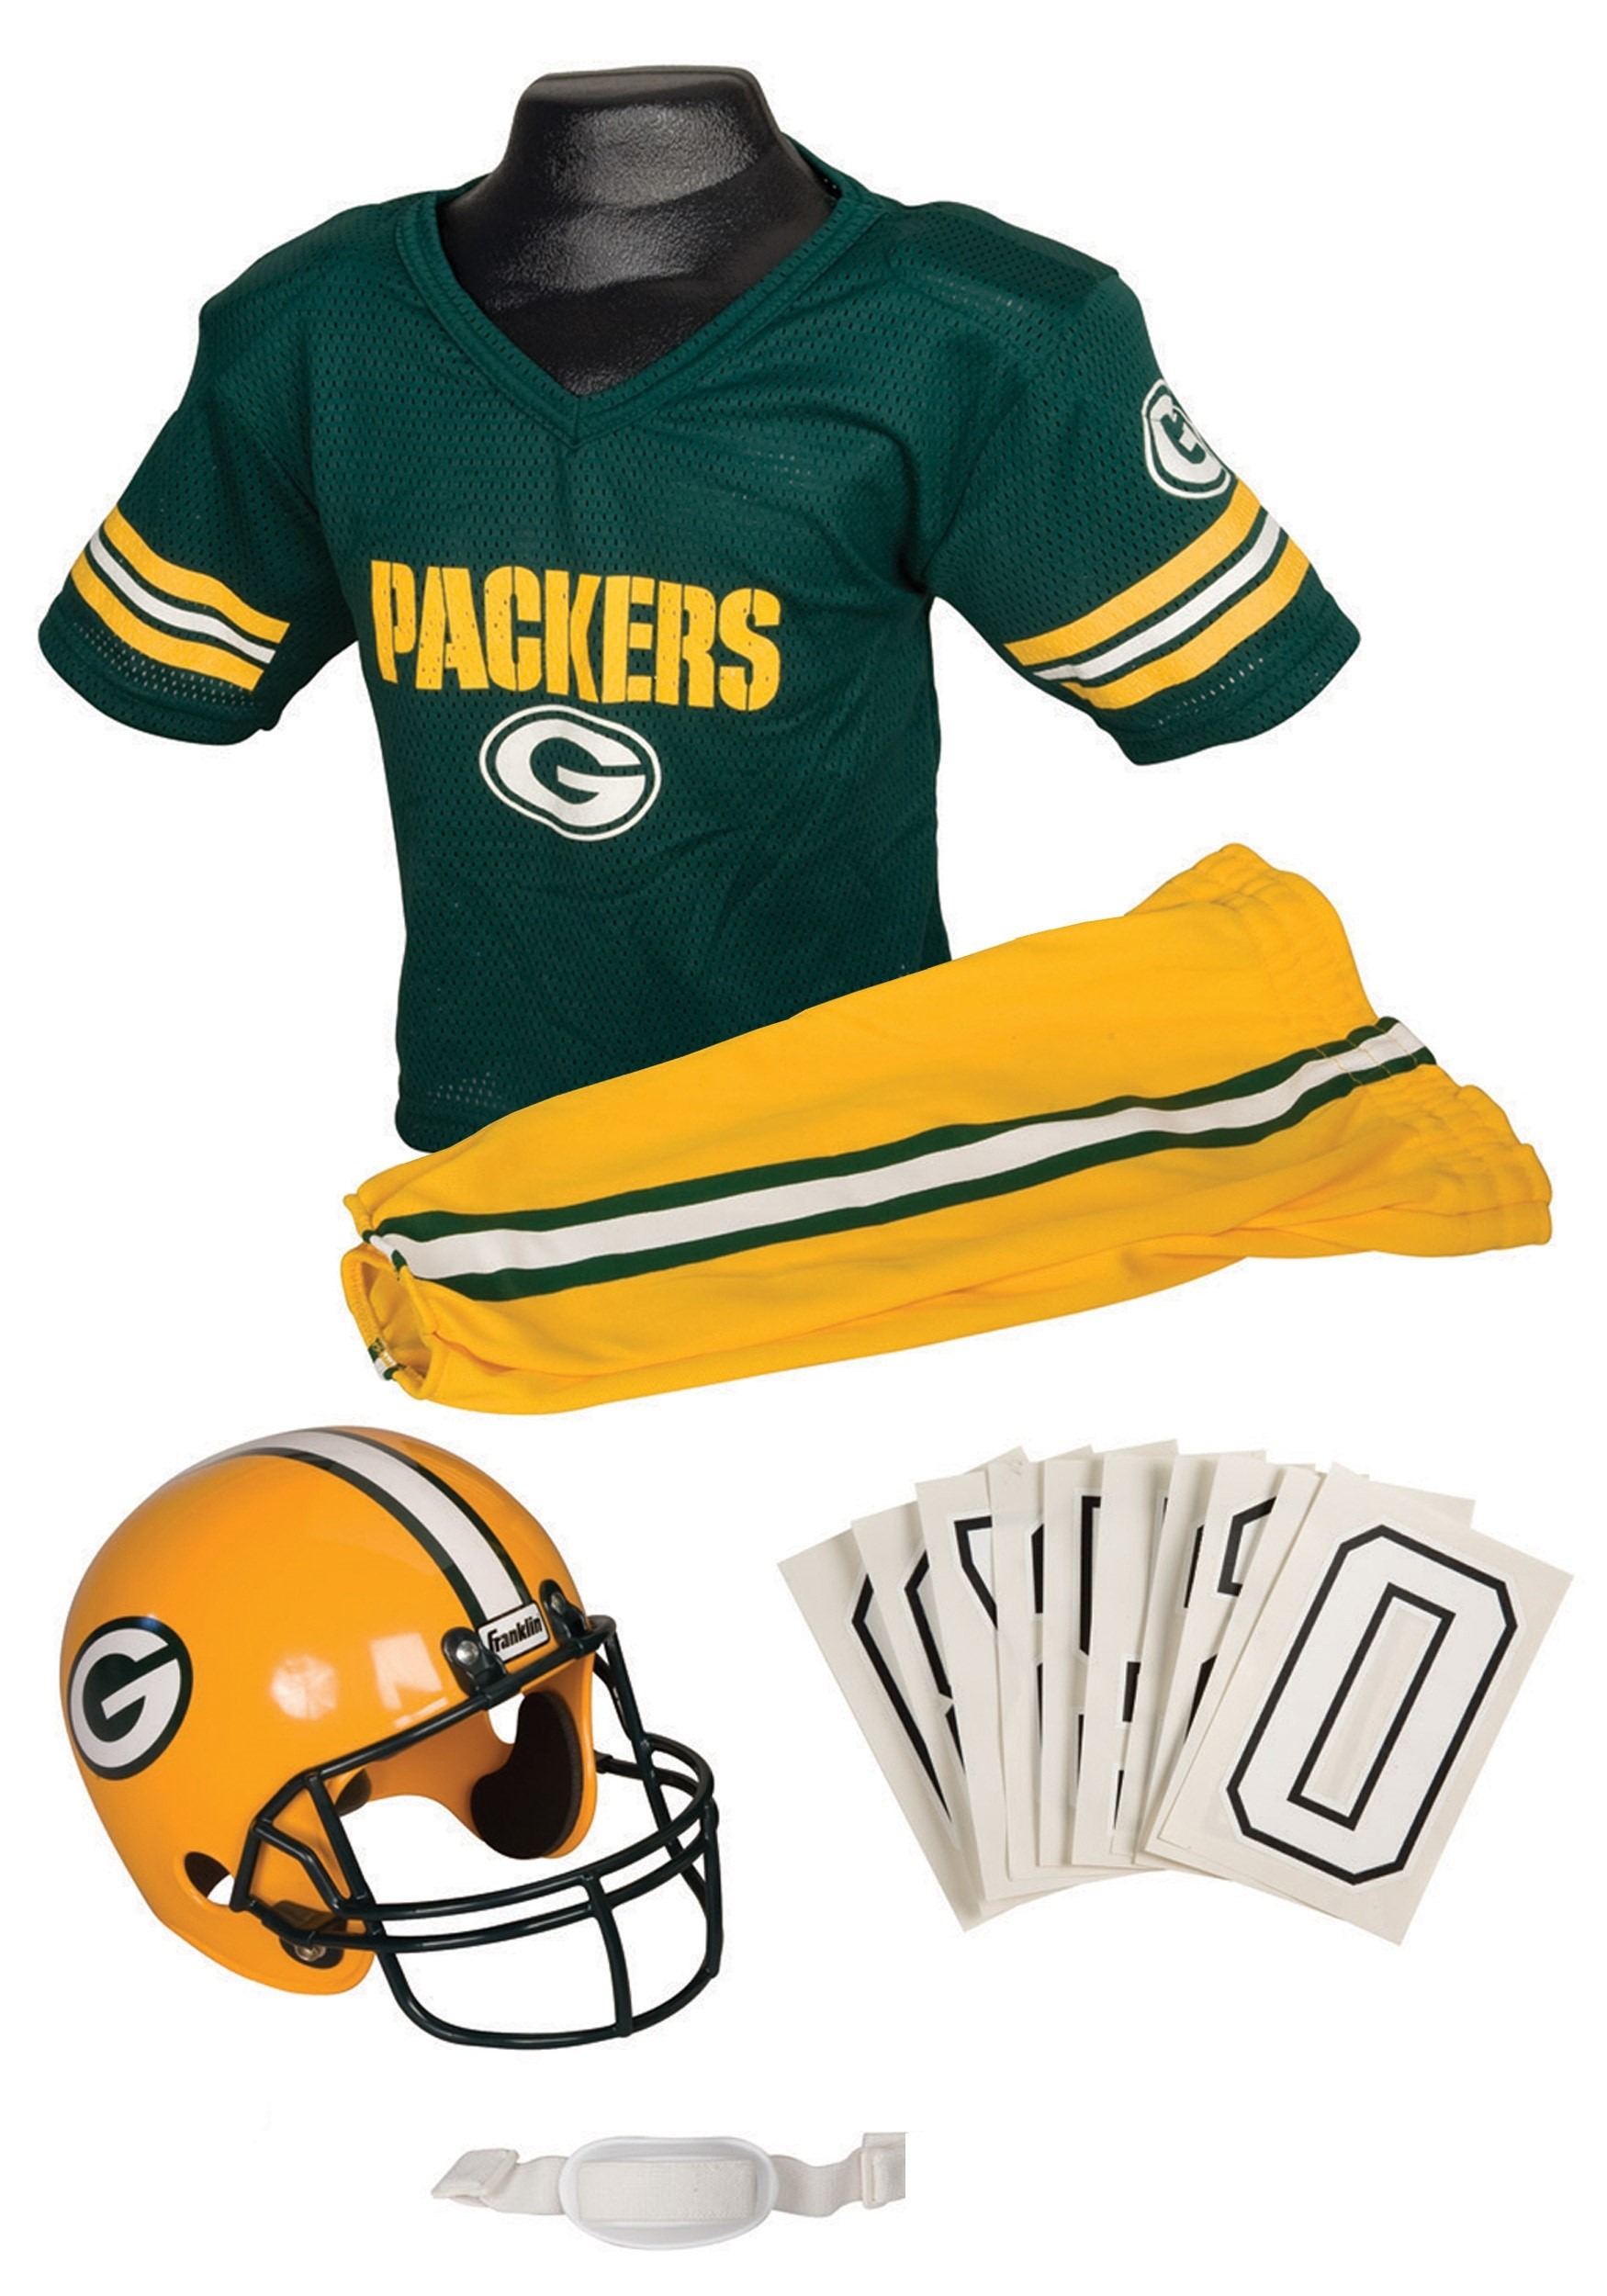 Kid’s NFL Packers Uniform Costume